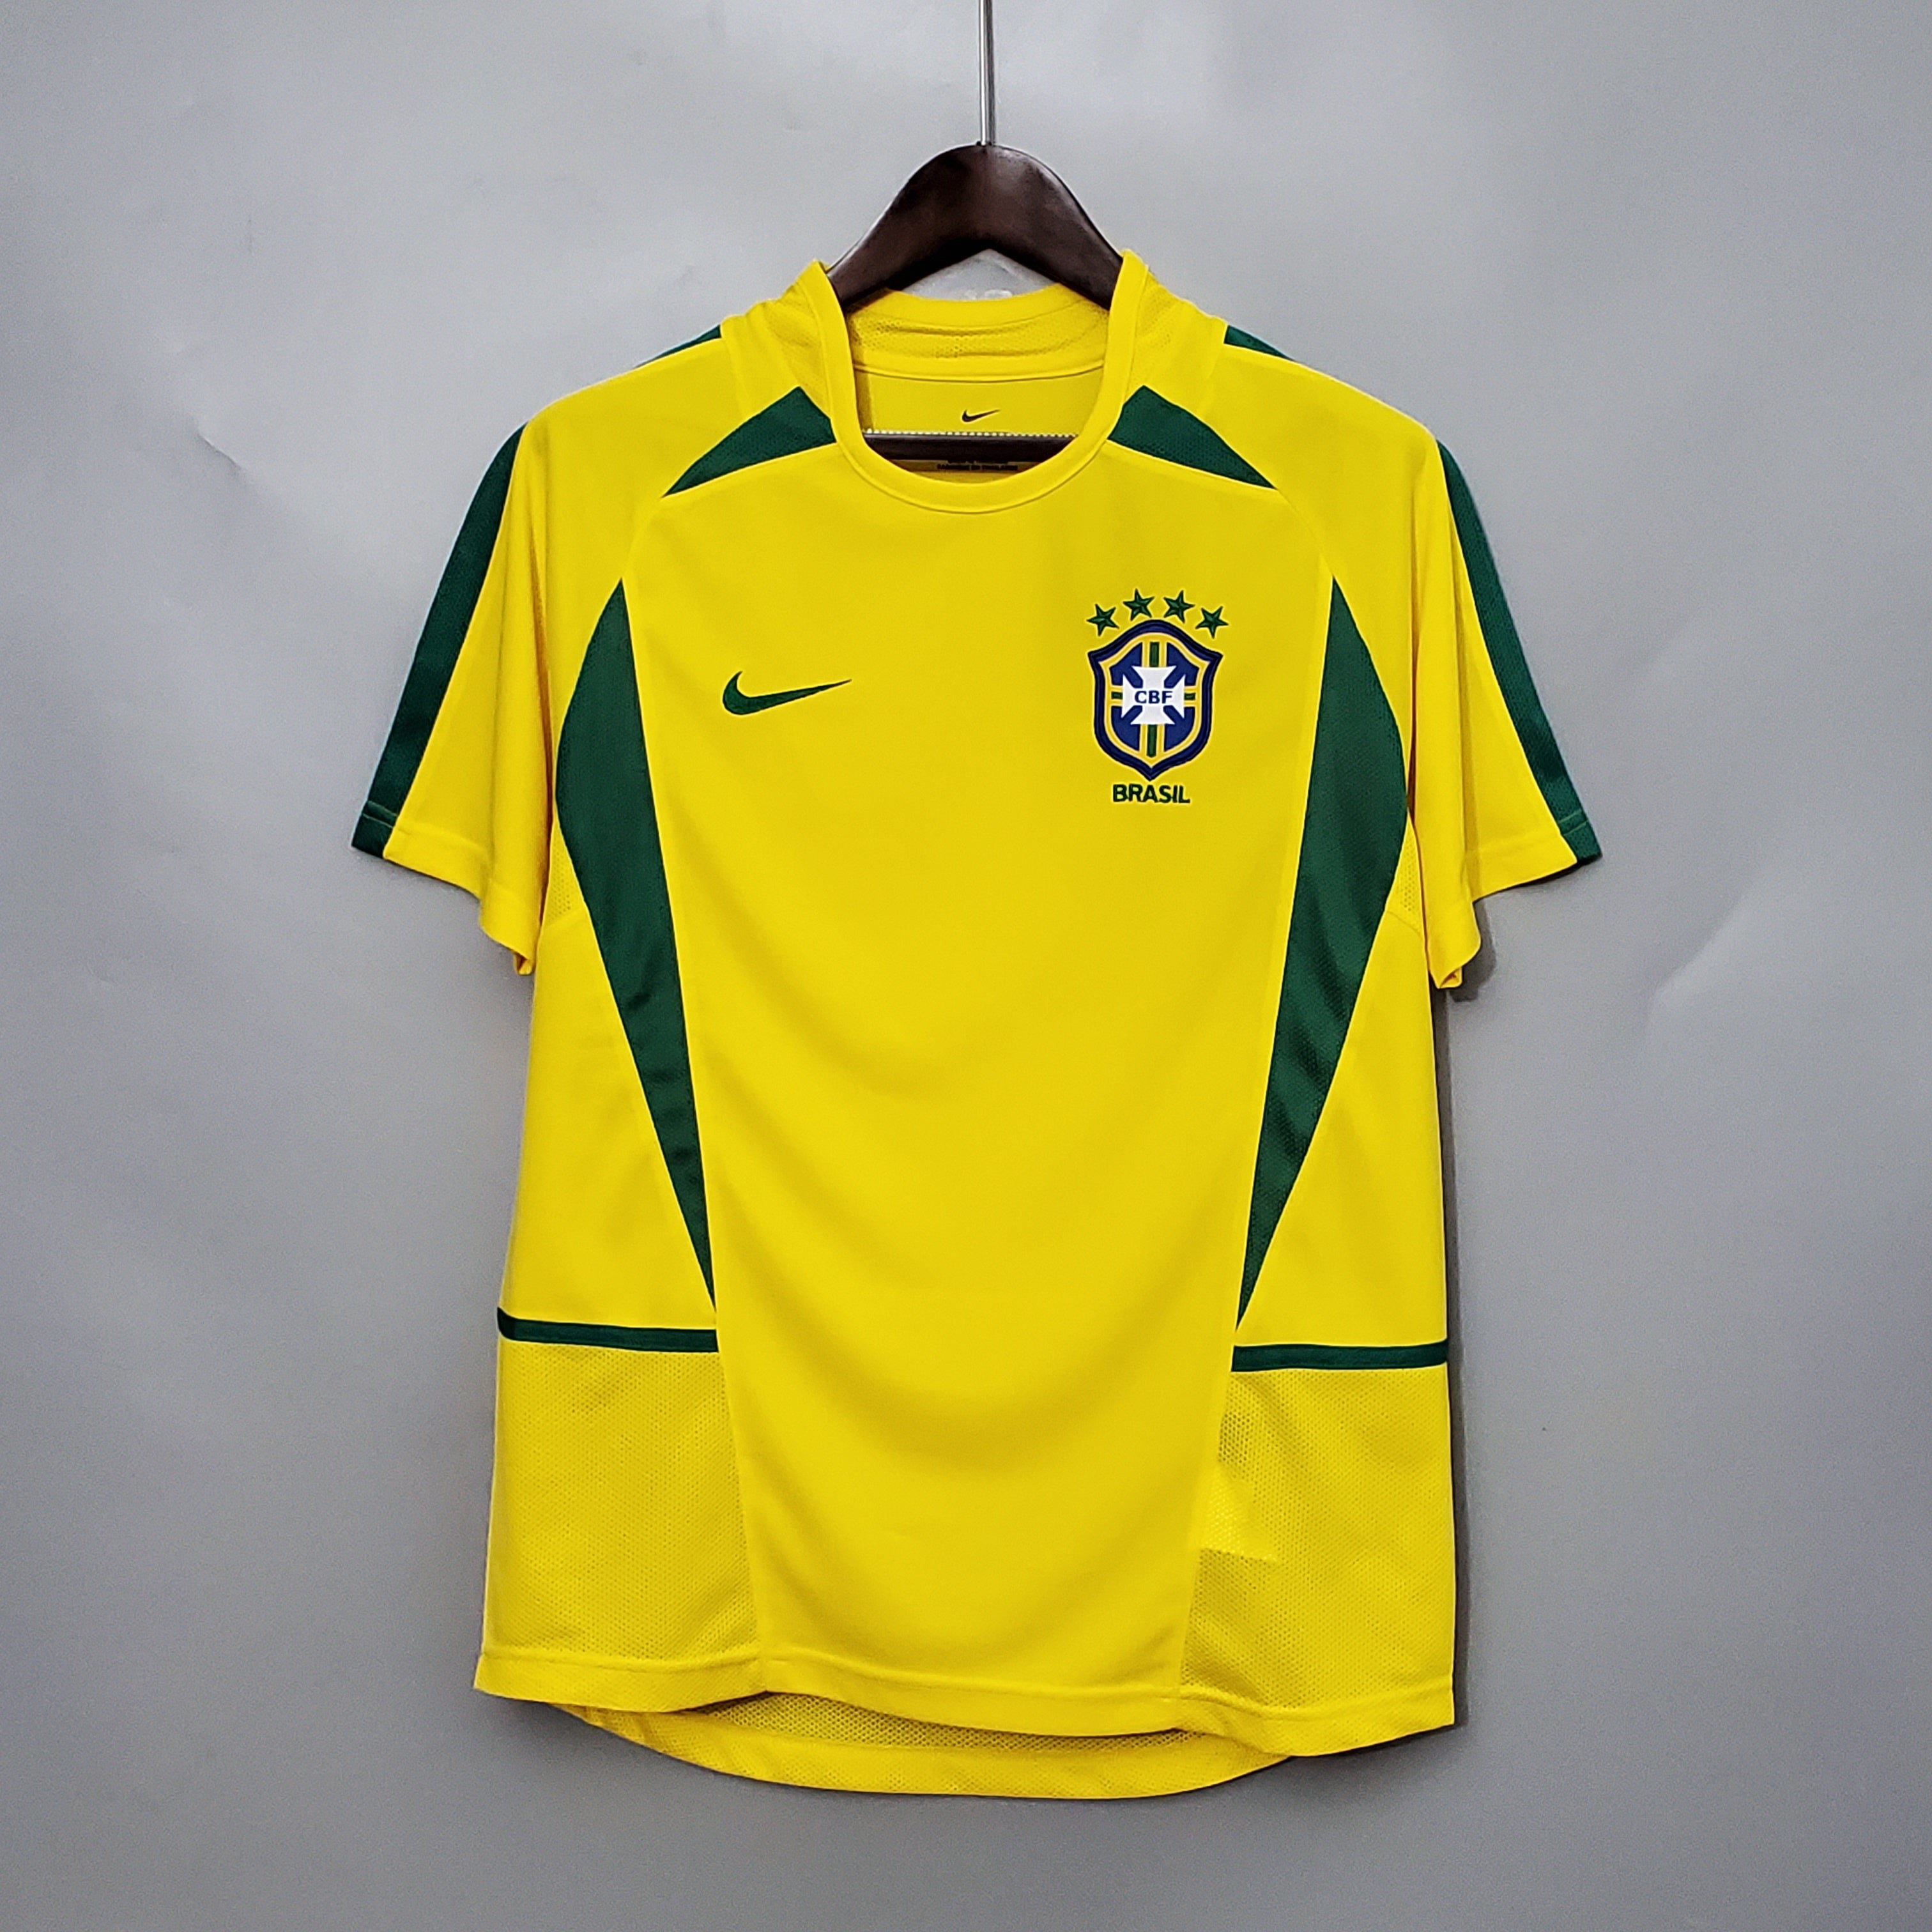 Brazil retro shirt 02